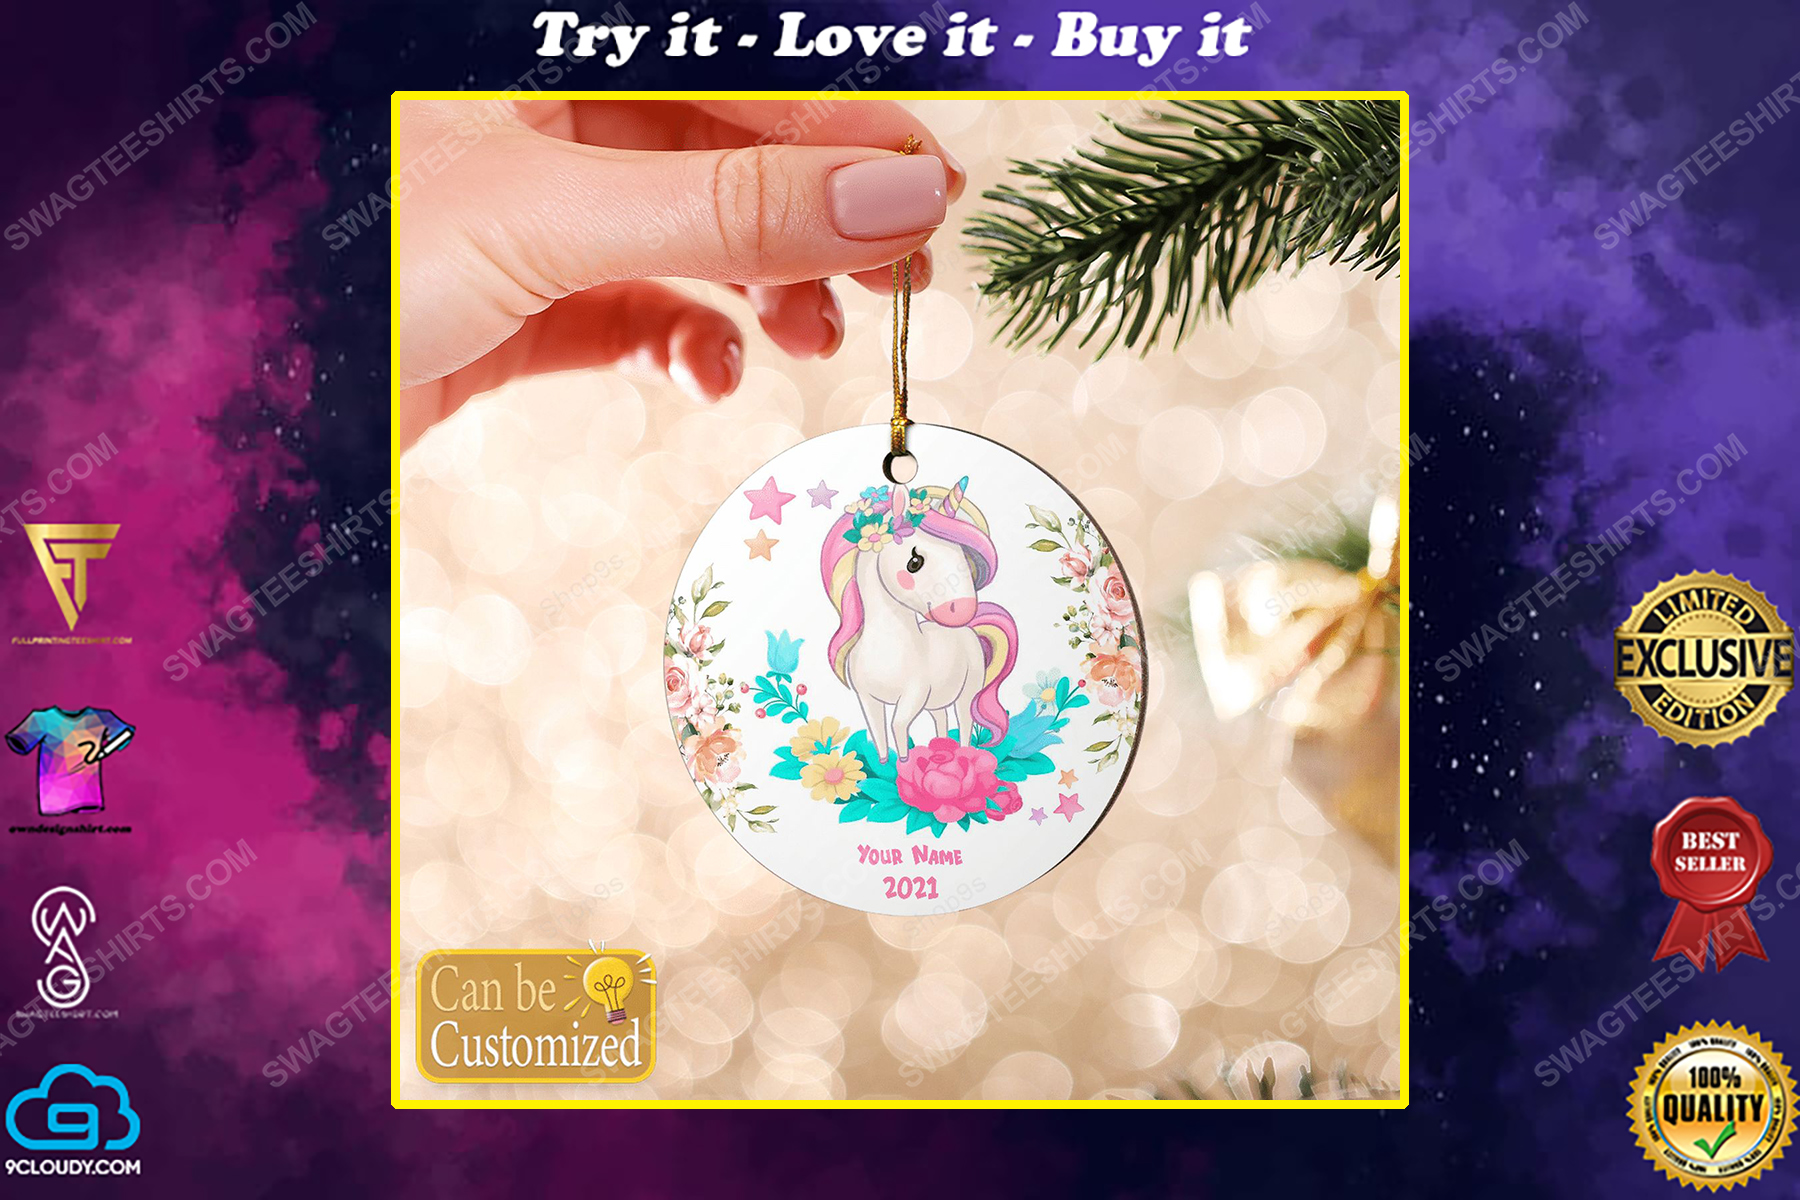 Custom unicorn christmas gift ornament